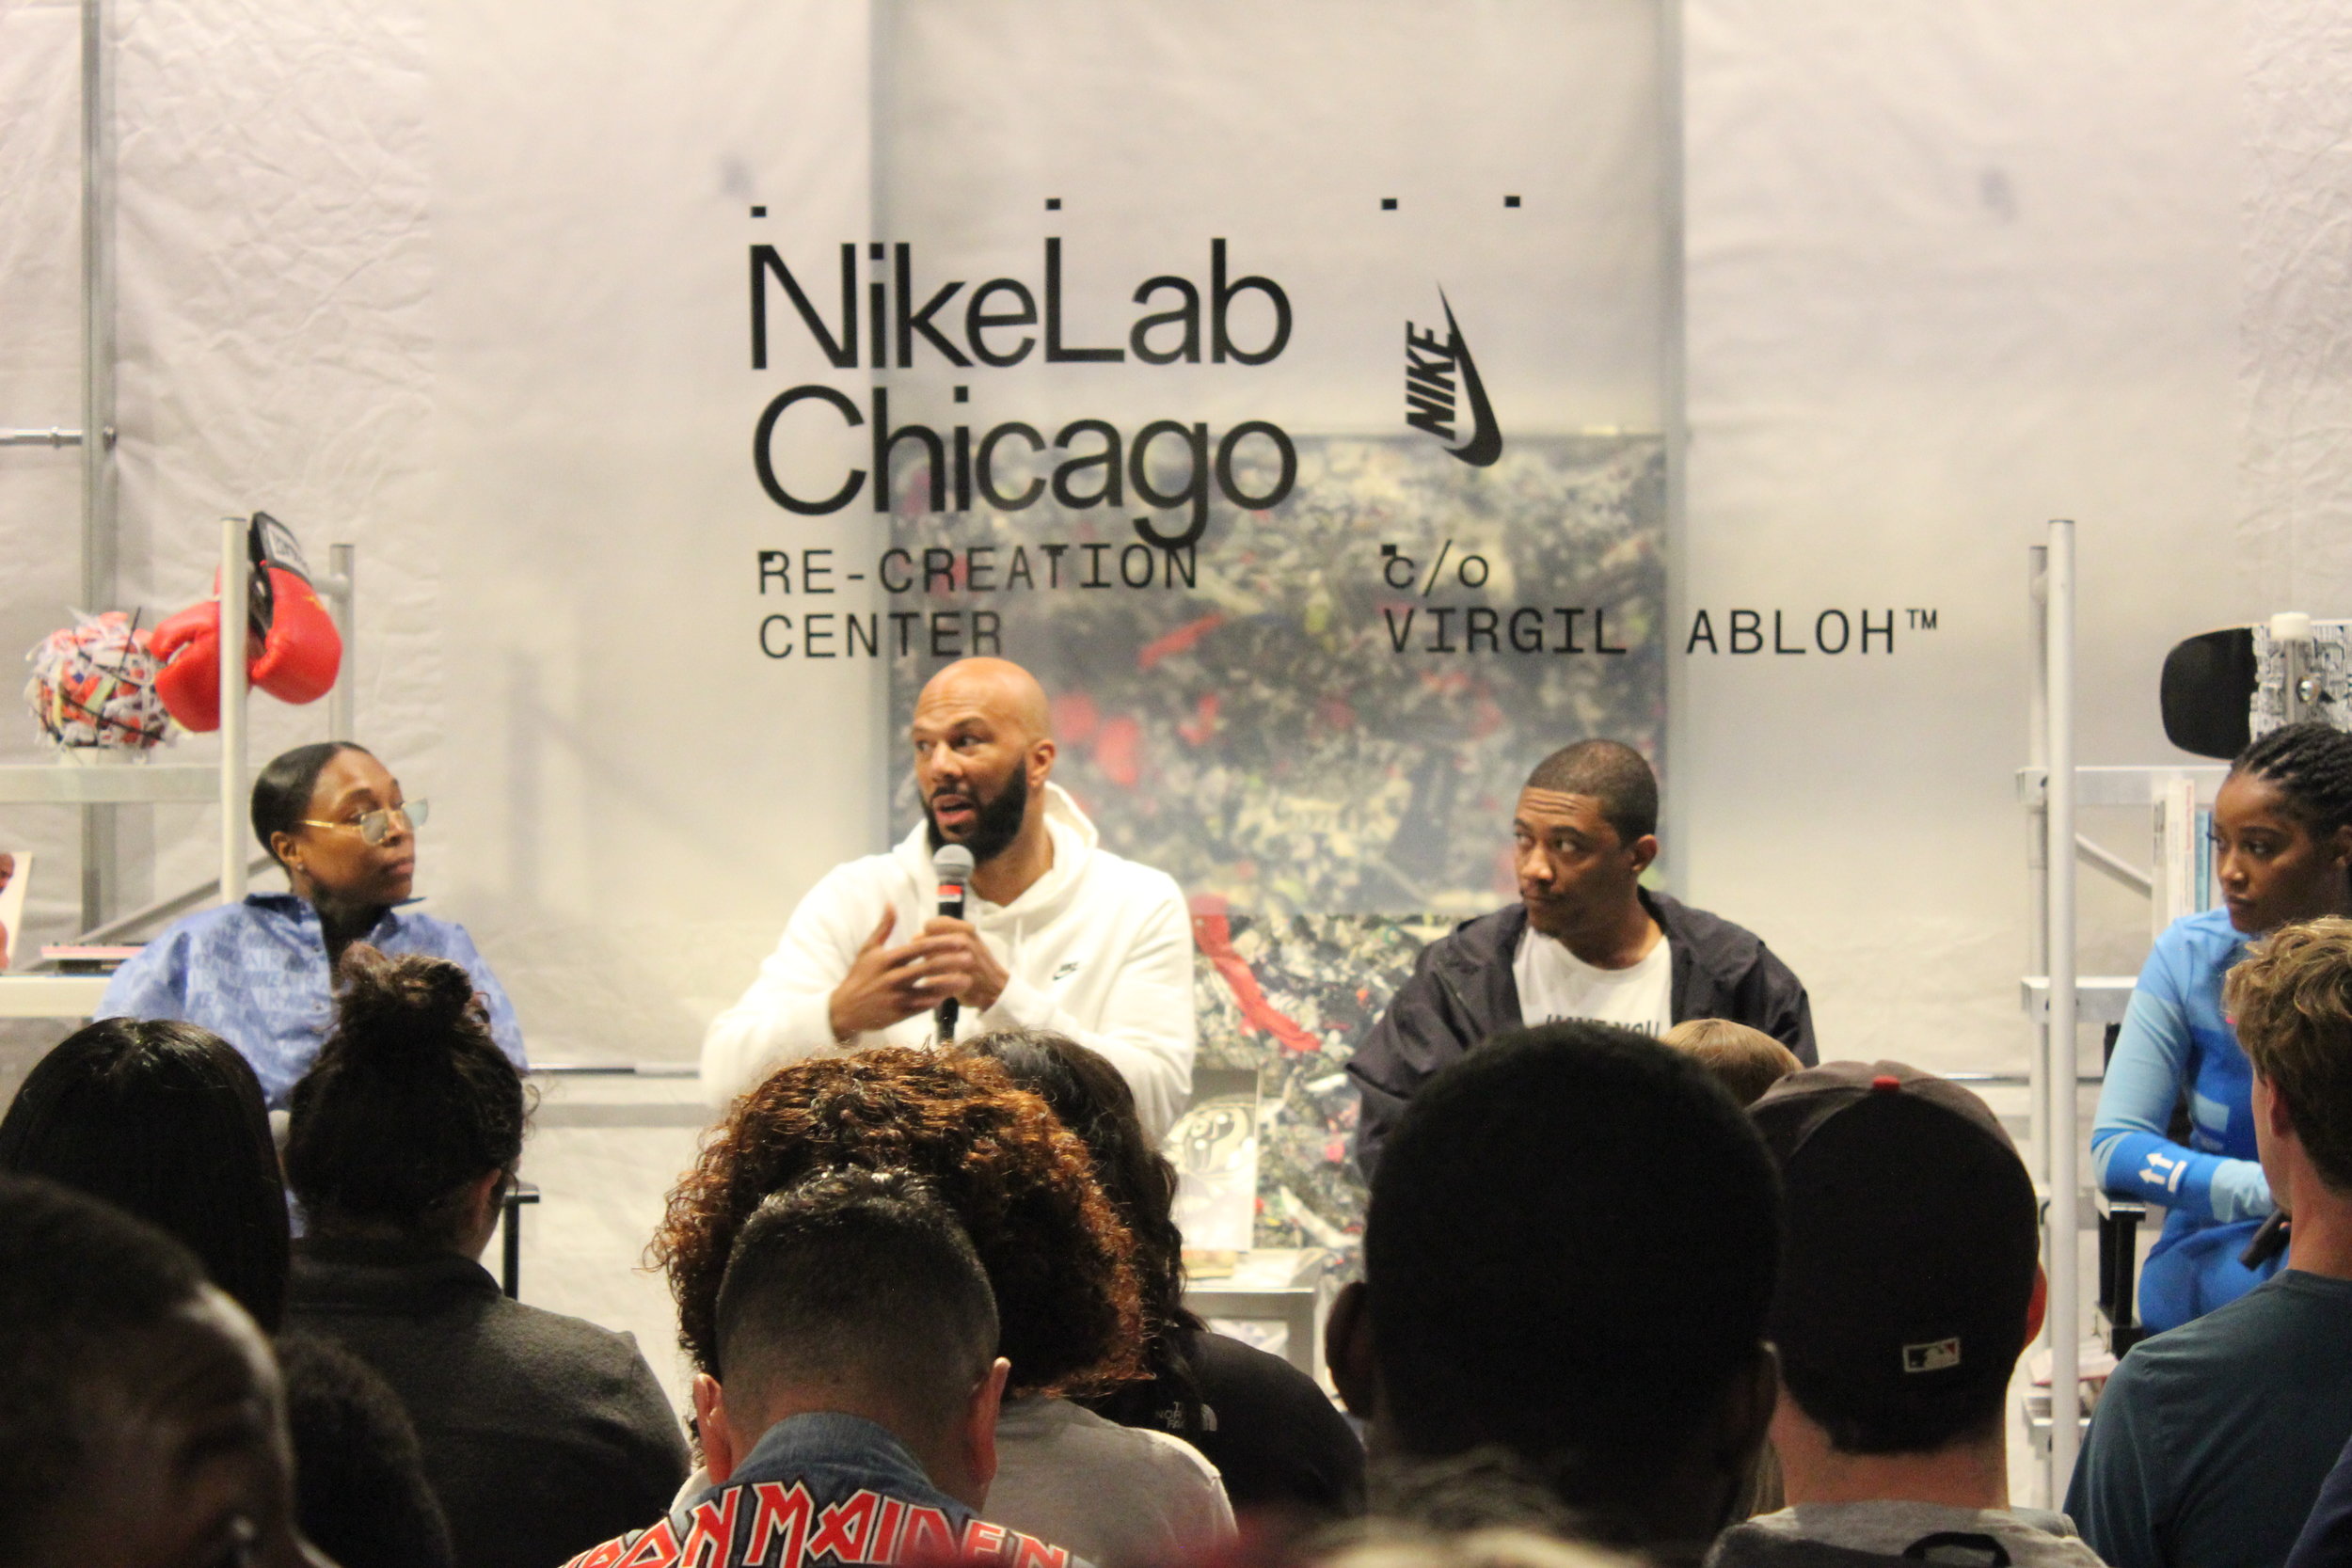 Virgil Abloh, NikeLab Chicago Re-Creation Center